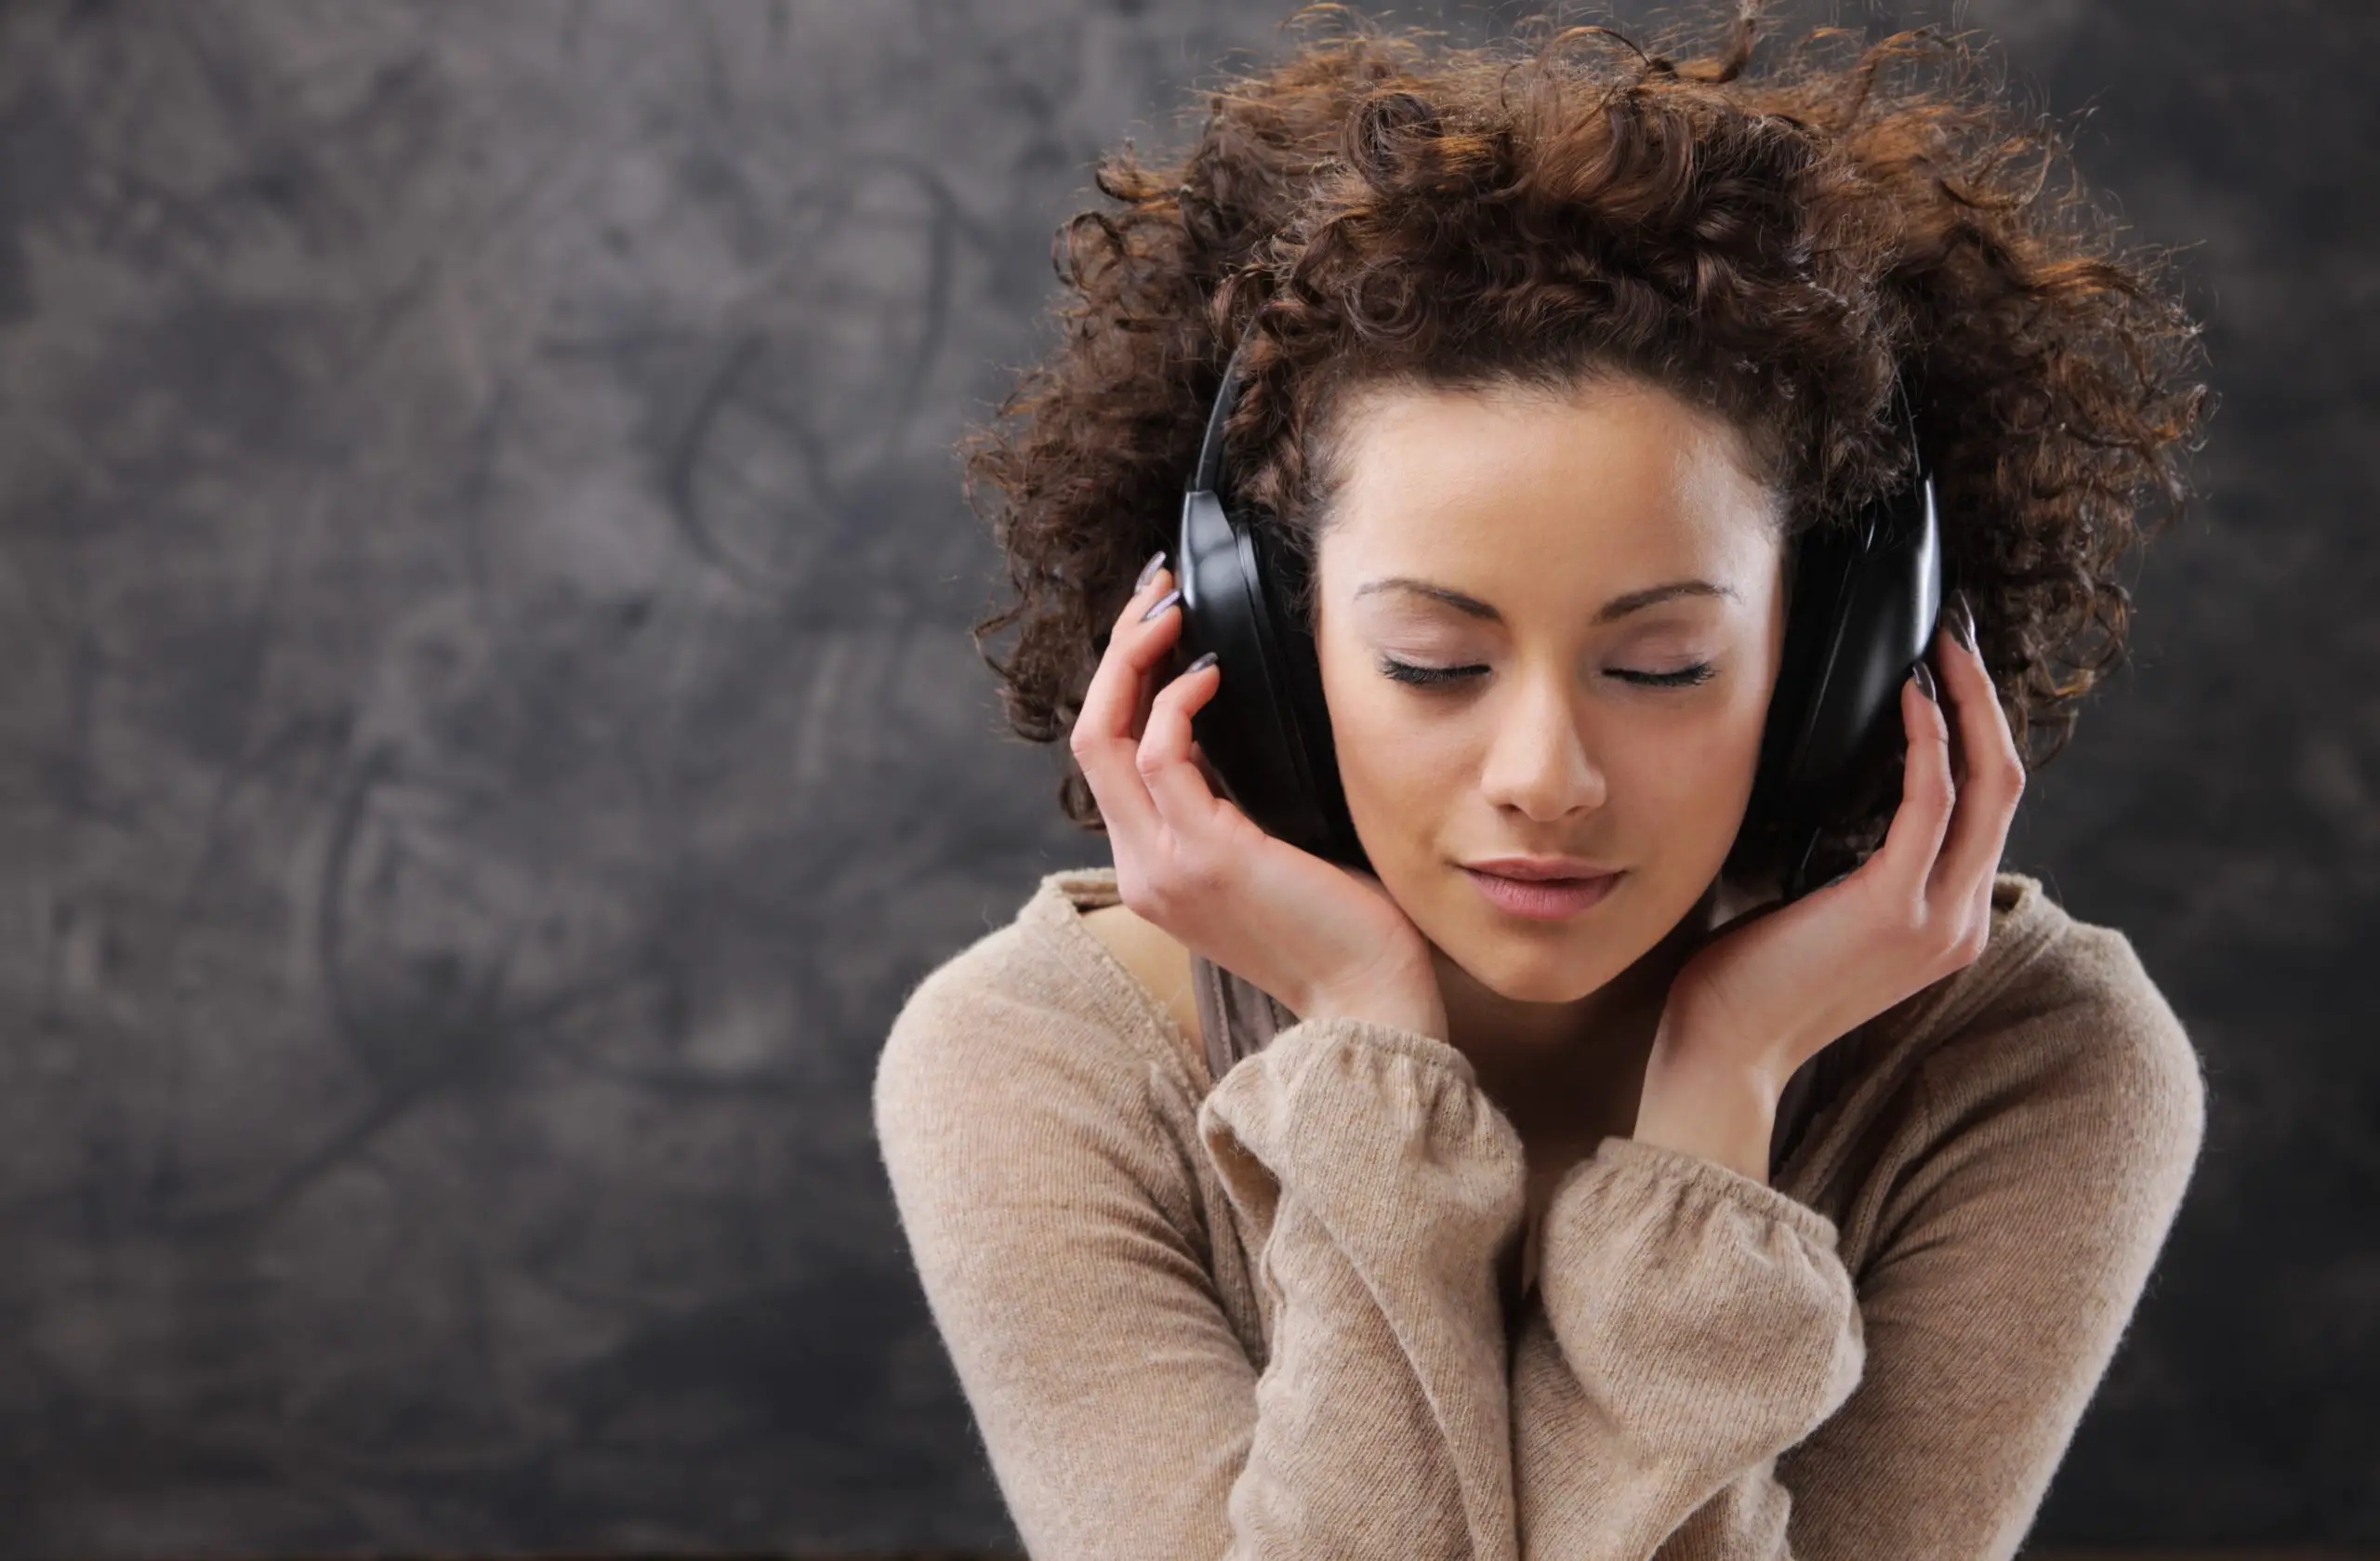 best ways to get paid to listen to music